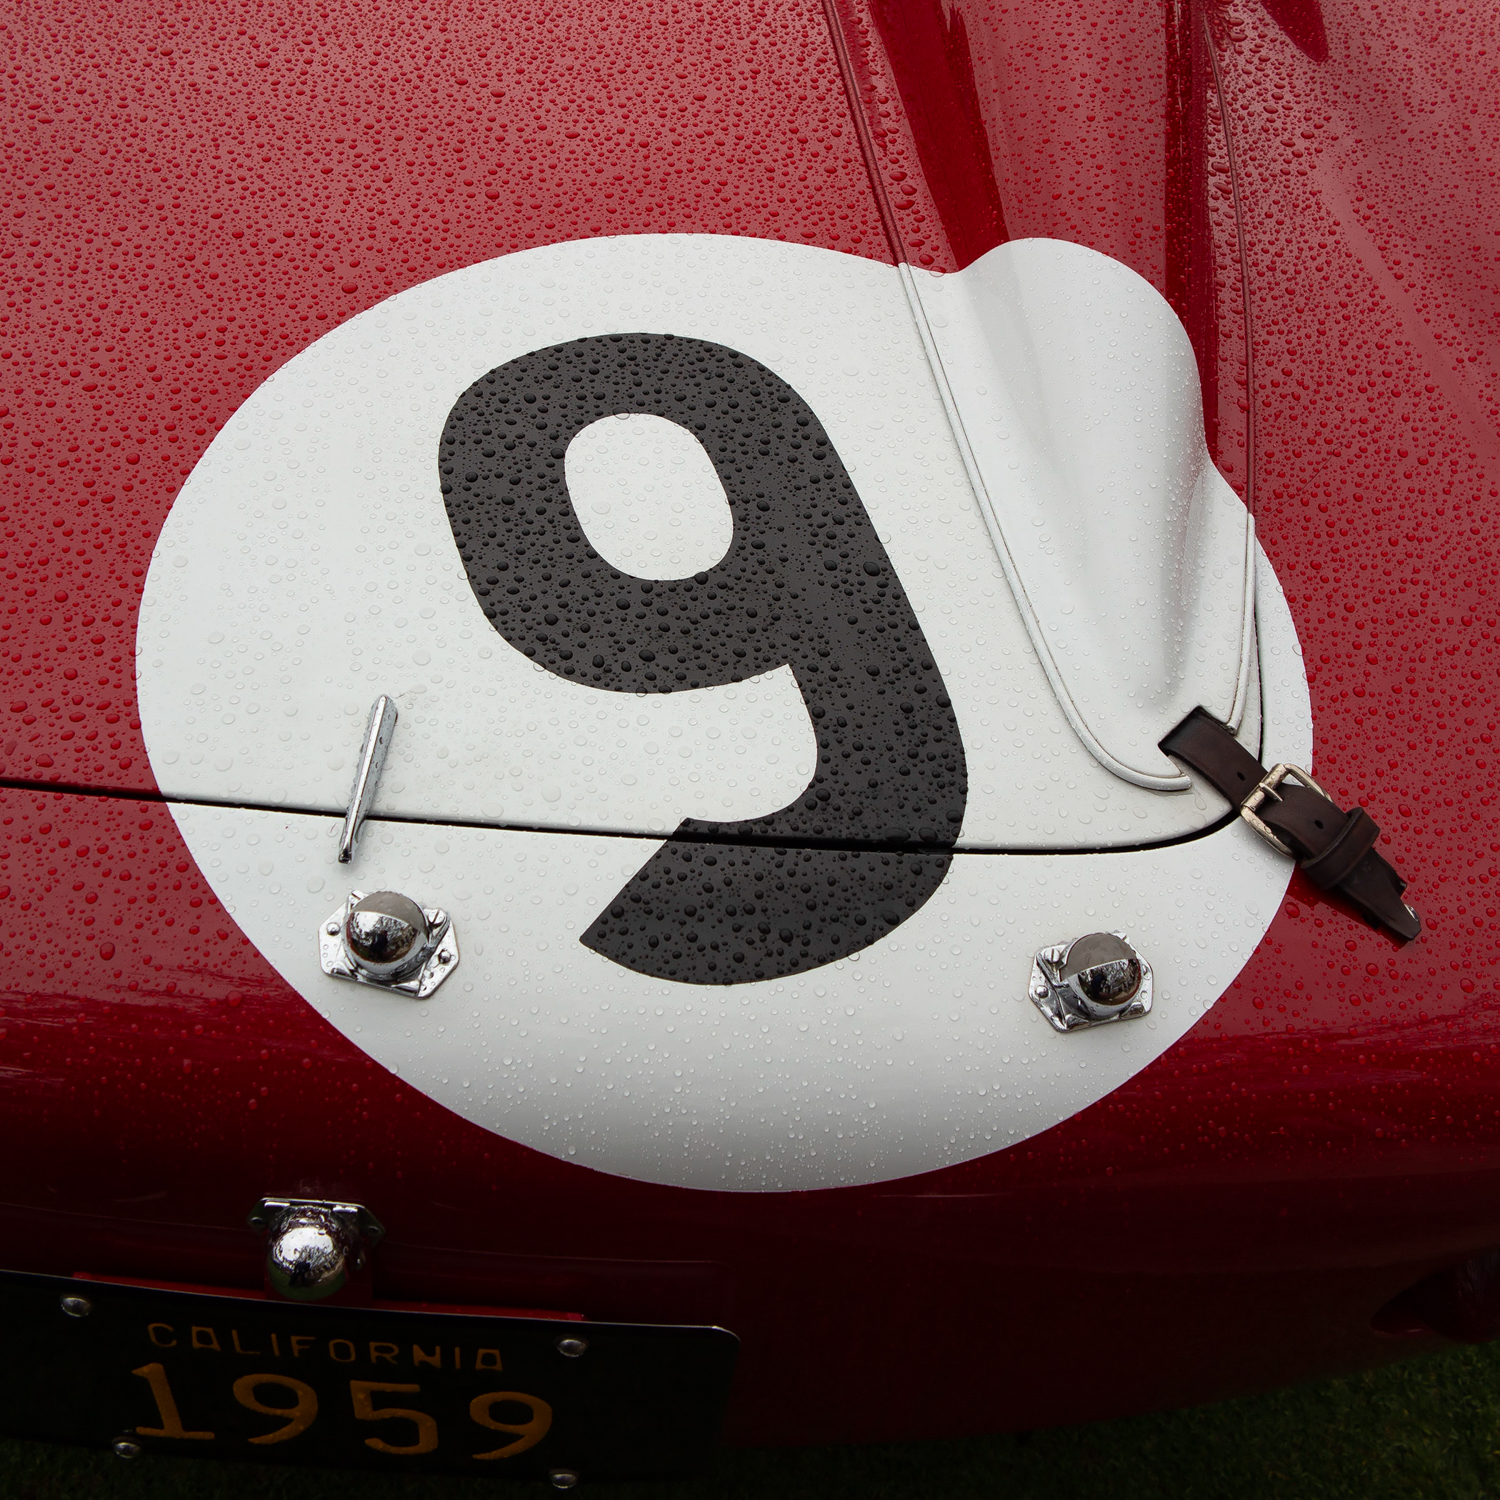 Cavallino 28   Concorso d'Eleganza
#9-  1959 Ferrari 59/60 TR ser# 0770 Chuck Andersen